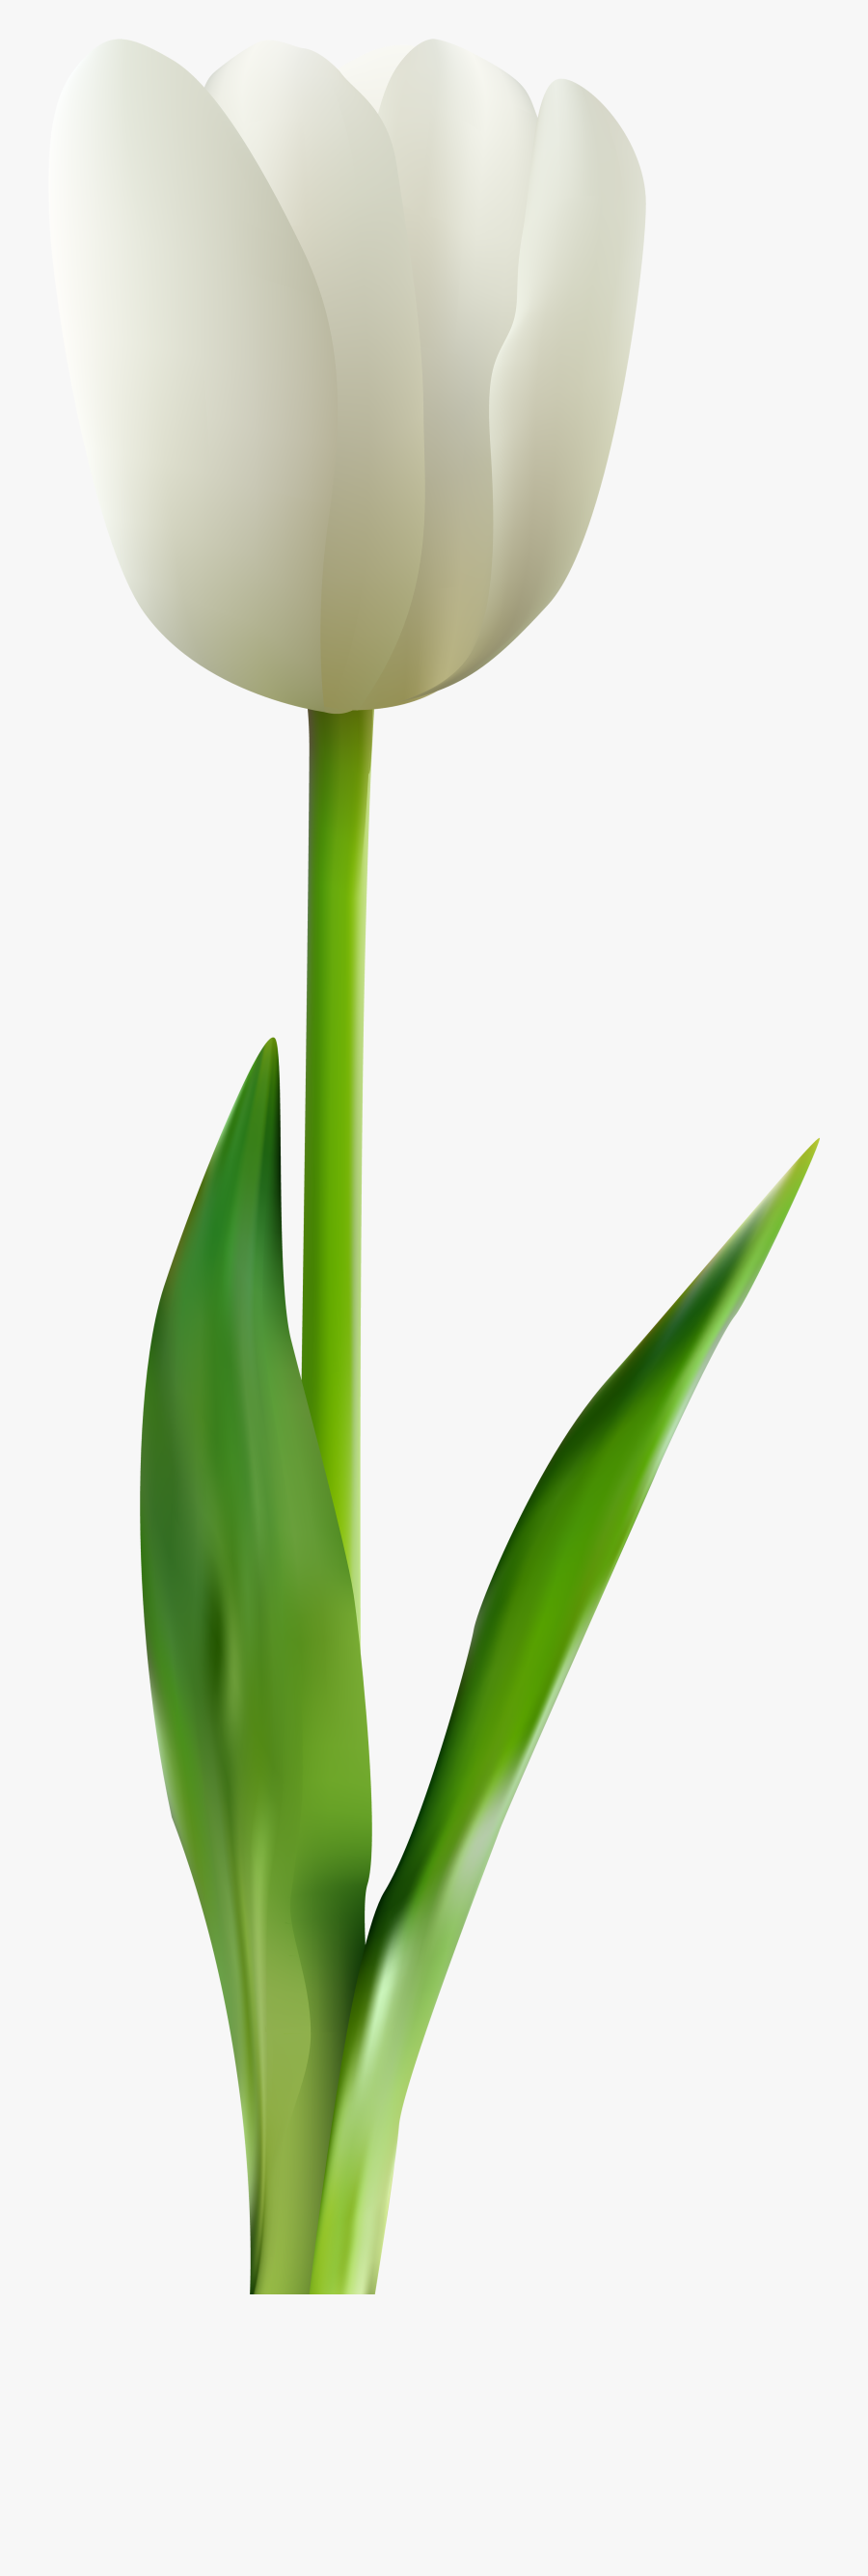 Tulip Flower Clip Art - White Tulip Flower Png, Transparent Clipart